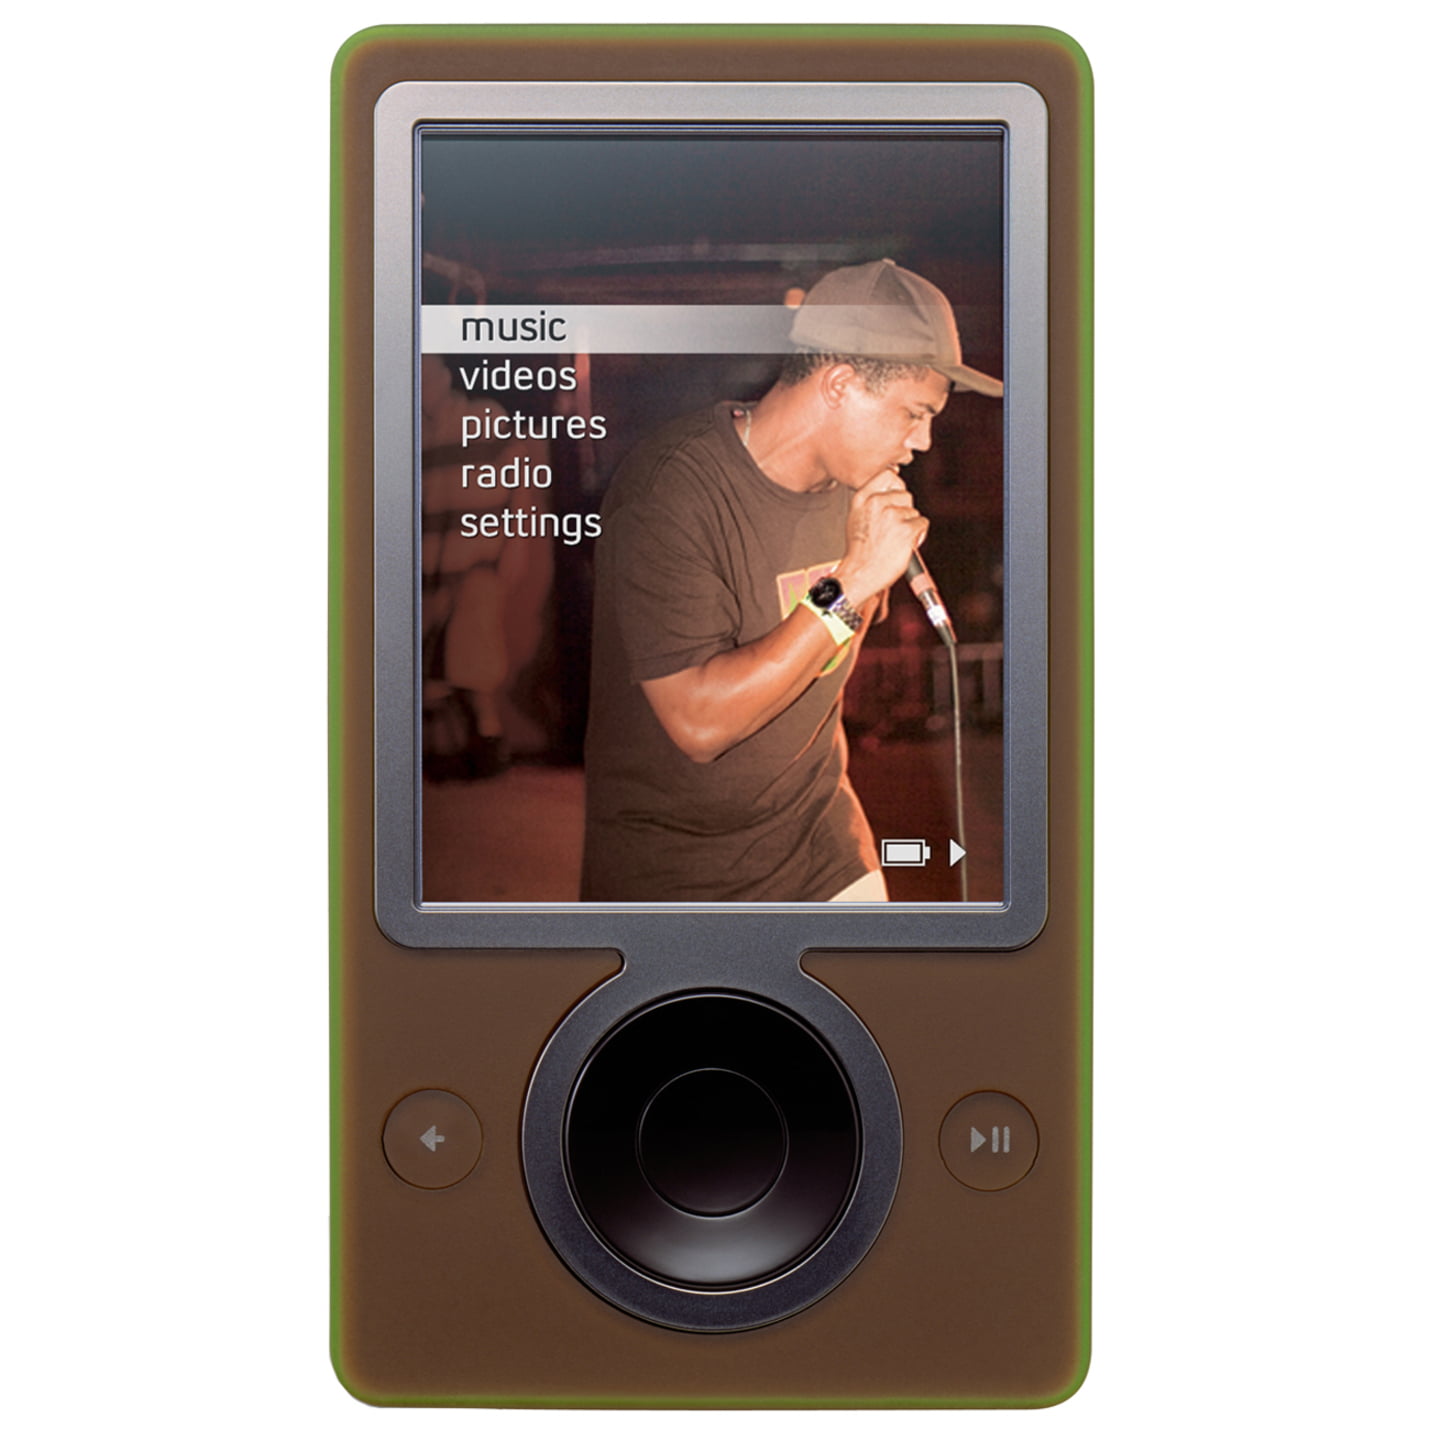 Dertig Zakenman Accountant Microsoft Zune MP3/Video Player with LCD Display, Brown - Walmart.com